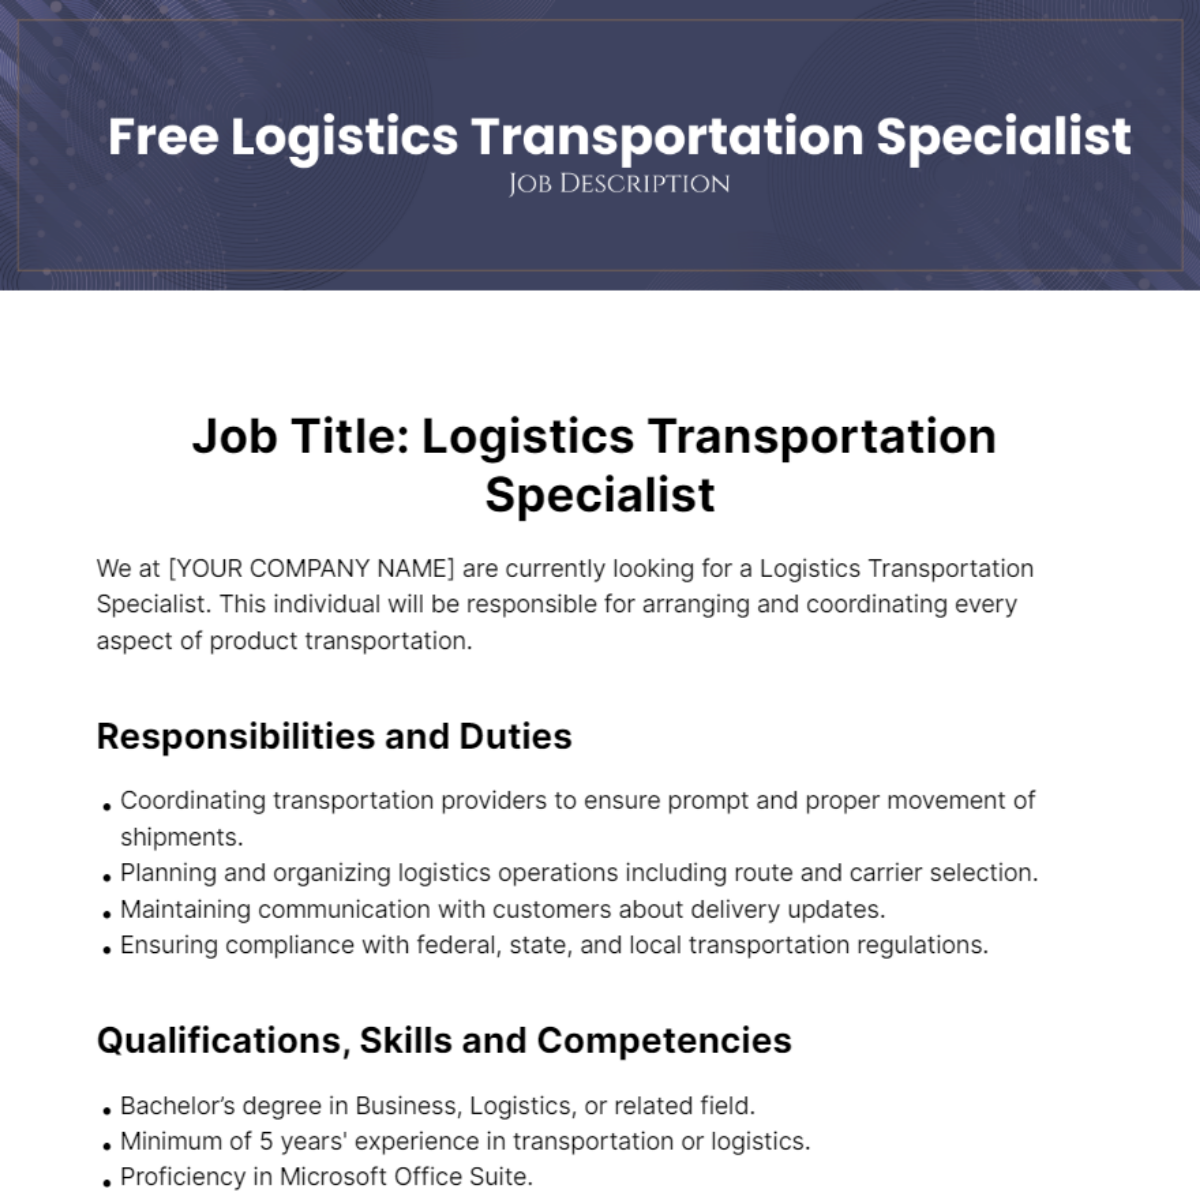 Free Logistics Transportation Specialist Job Description Template